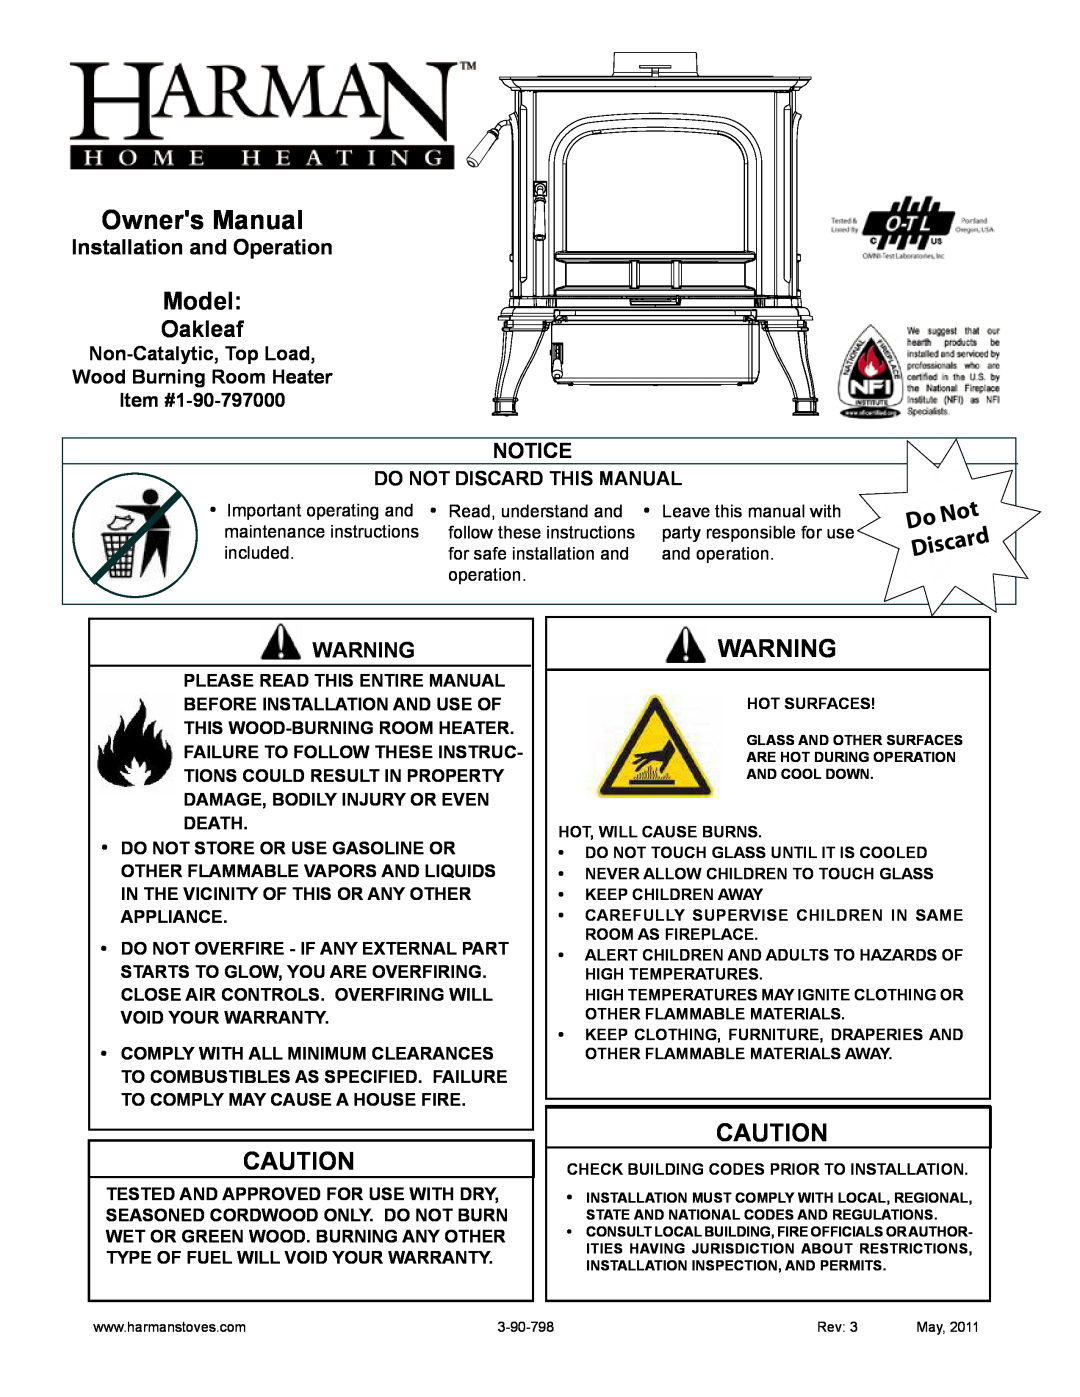 Harman Stove Company 1-90-797000 manual Model, Oakleaf, Discard, Non-Catalytic,Top Load Wood Burning Room Heater 